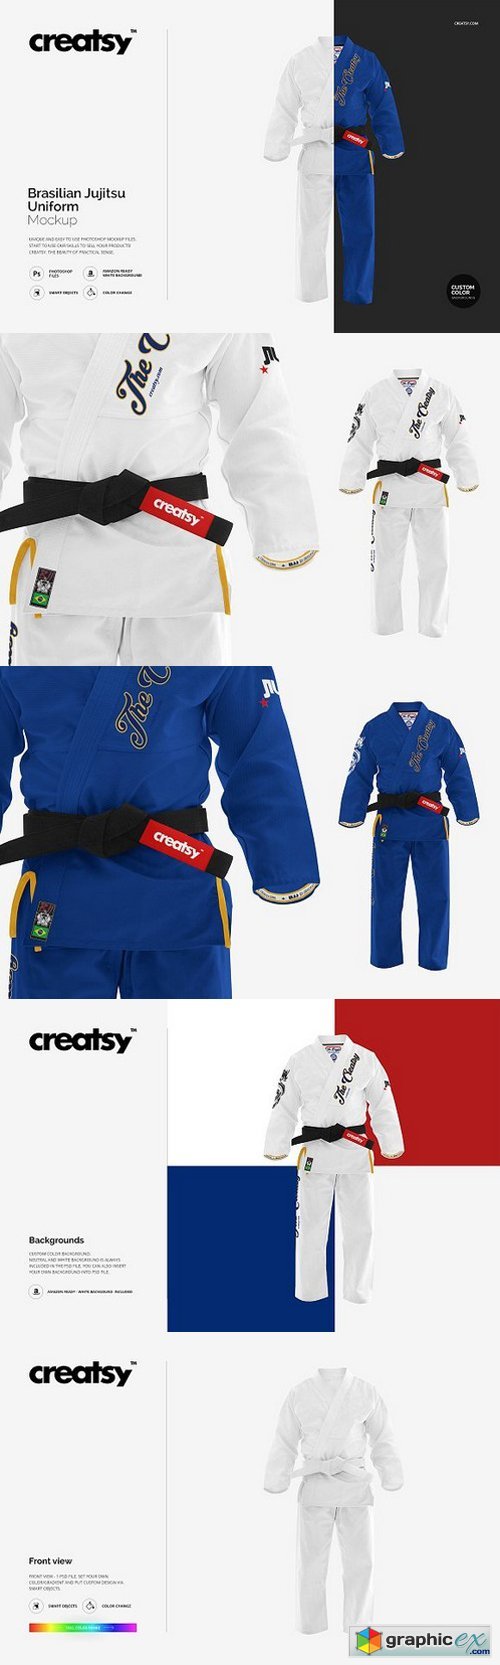 Brasilian Jiu Jitsu Uniform Mockup